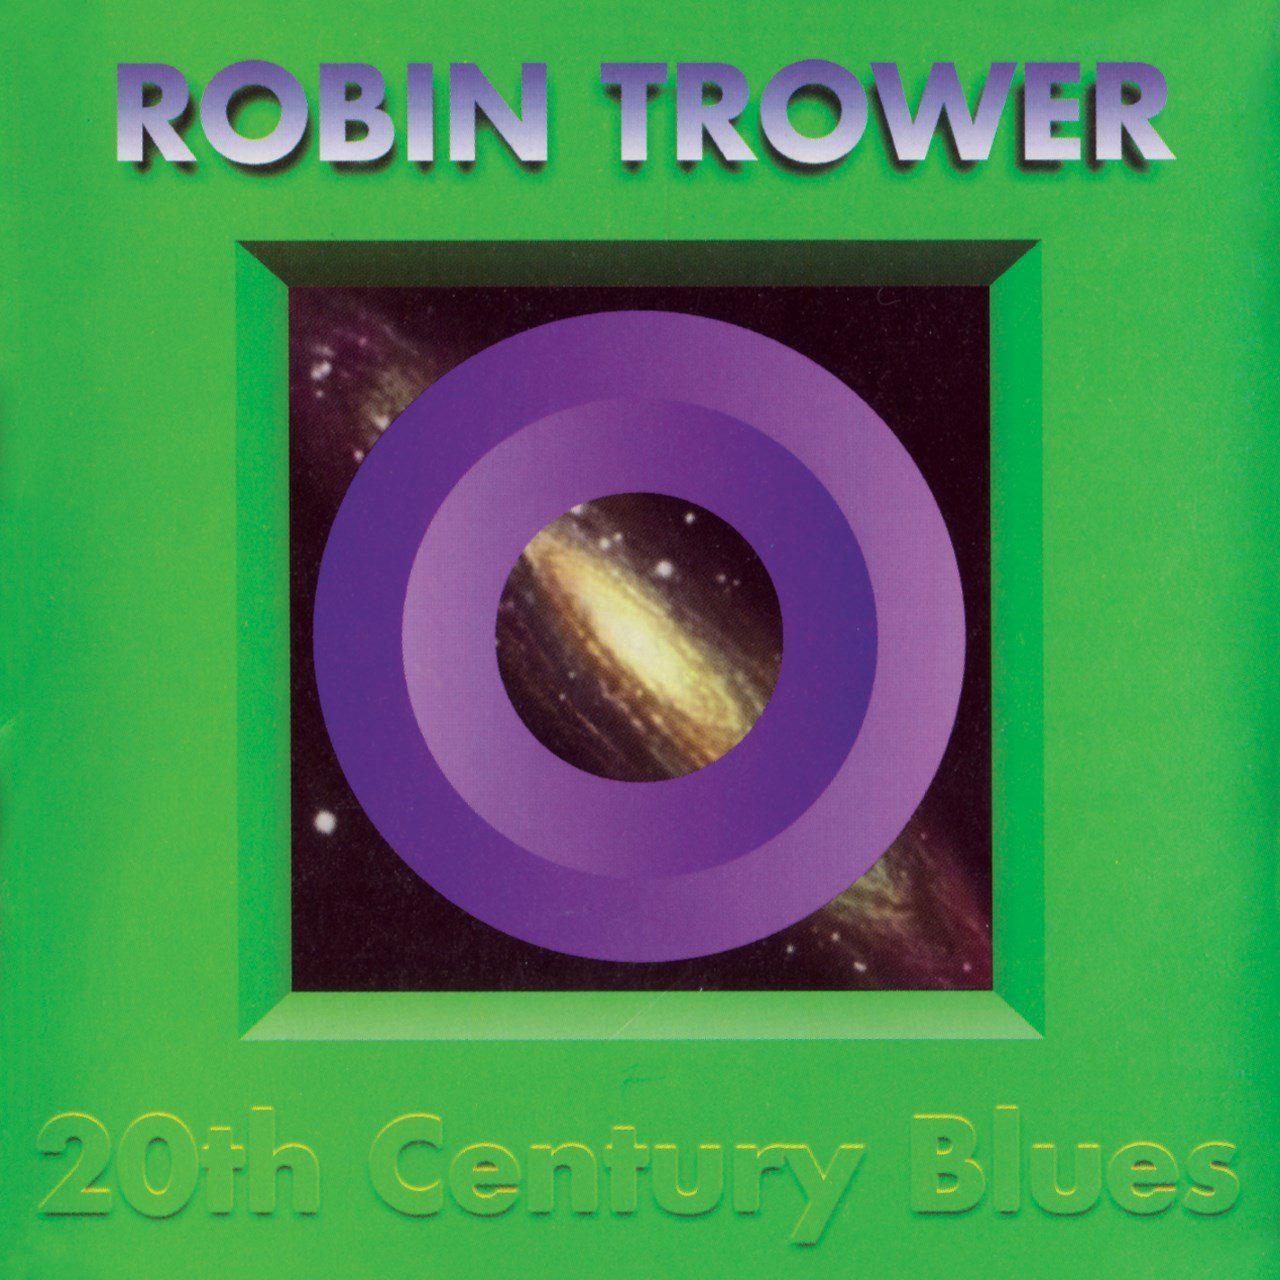 Robin Trower – 20th Century Blues cover album